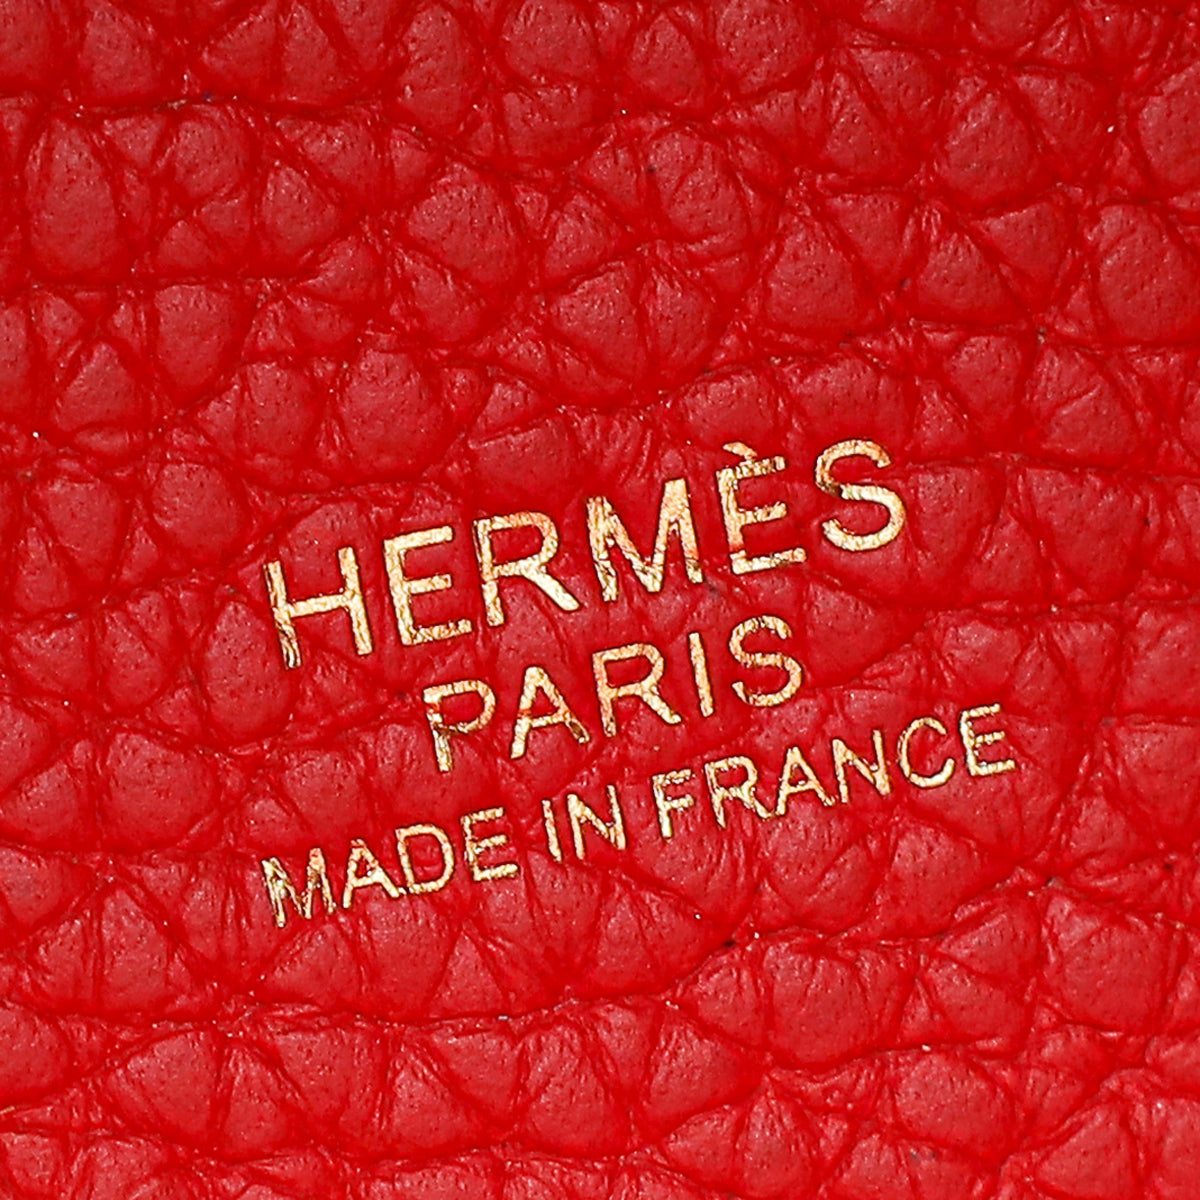 Hermes Rouge Casaque Picotin Lock 18 Bag